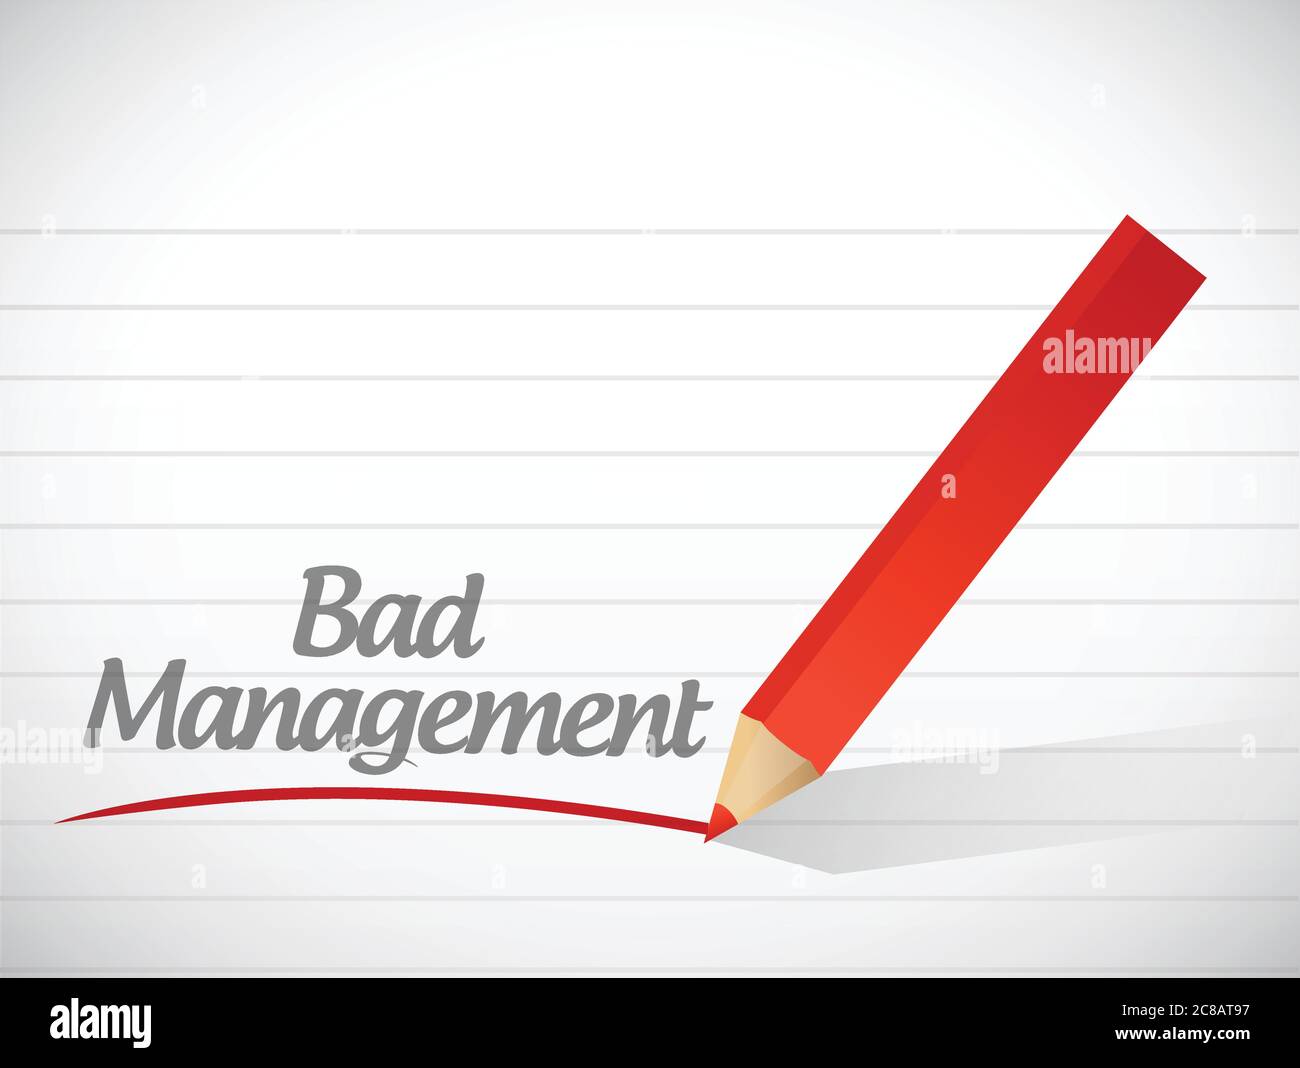 Bad management message illustration design over a white background Stock Vector